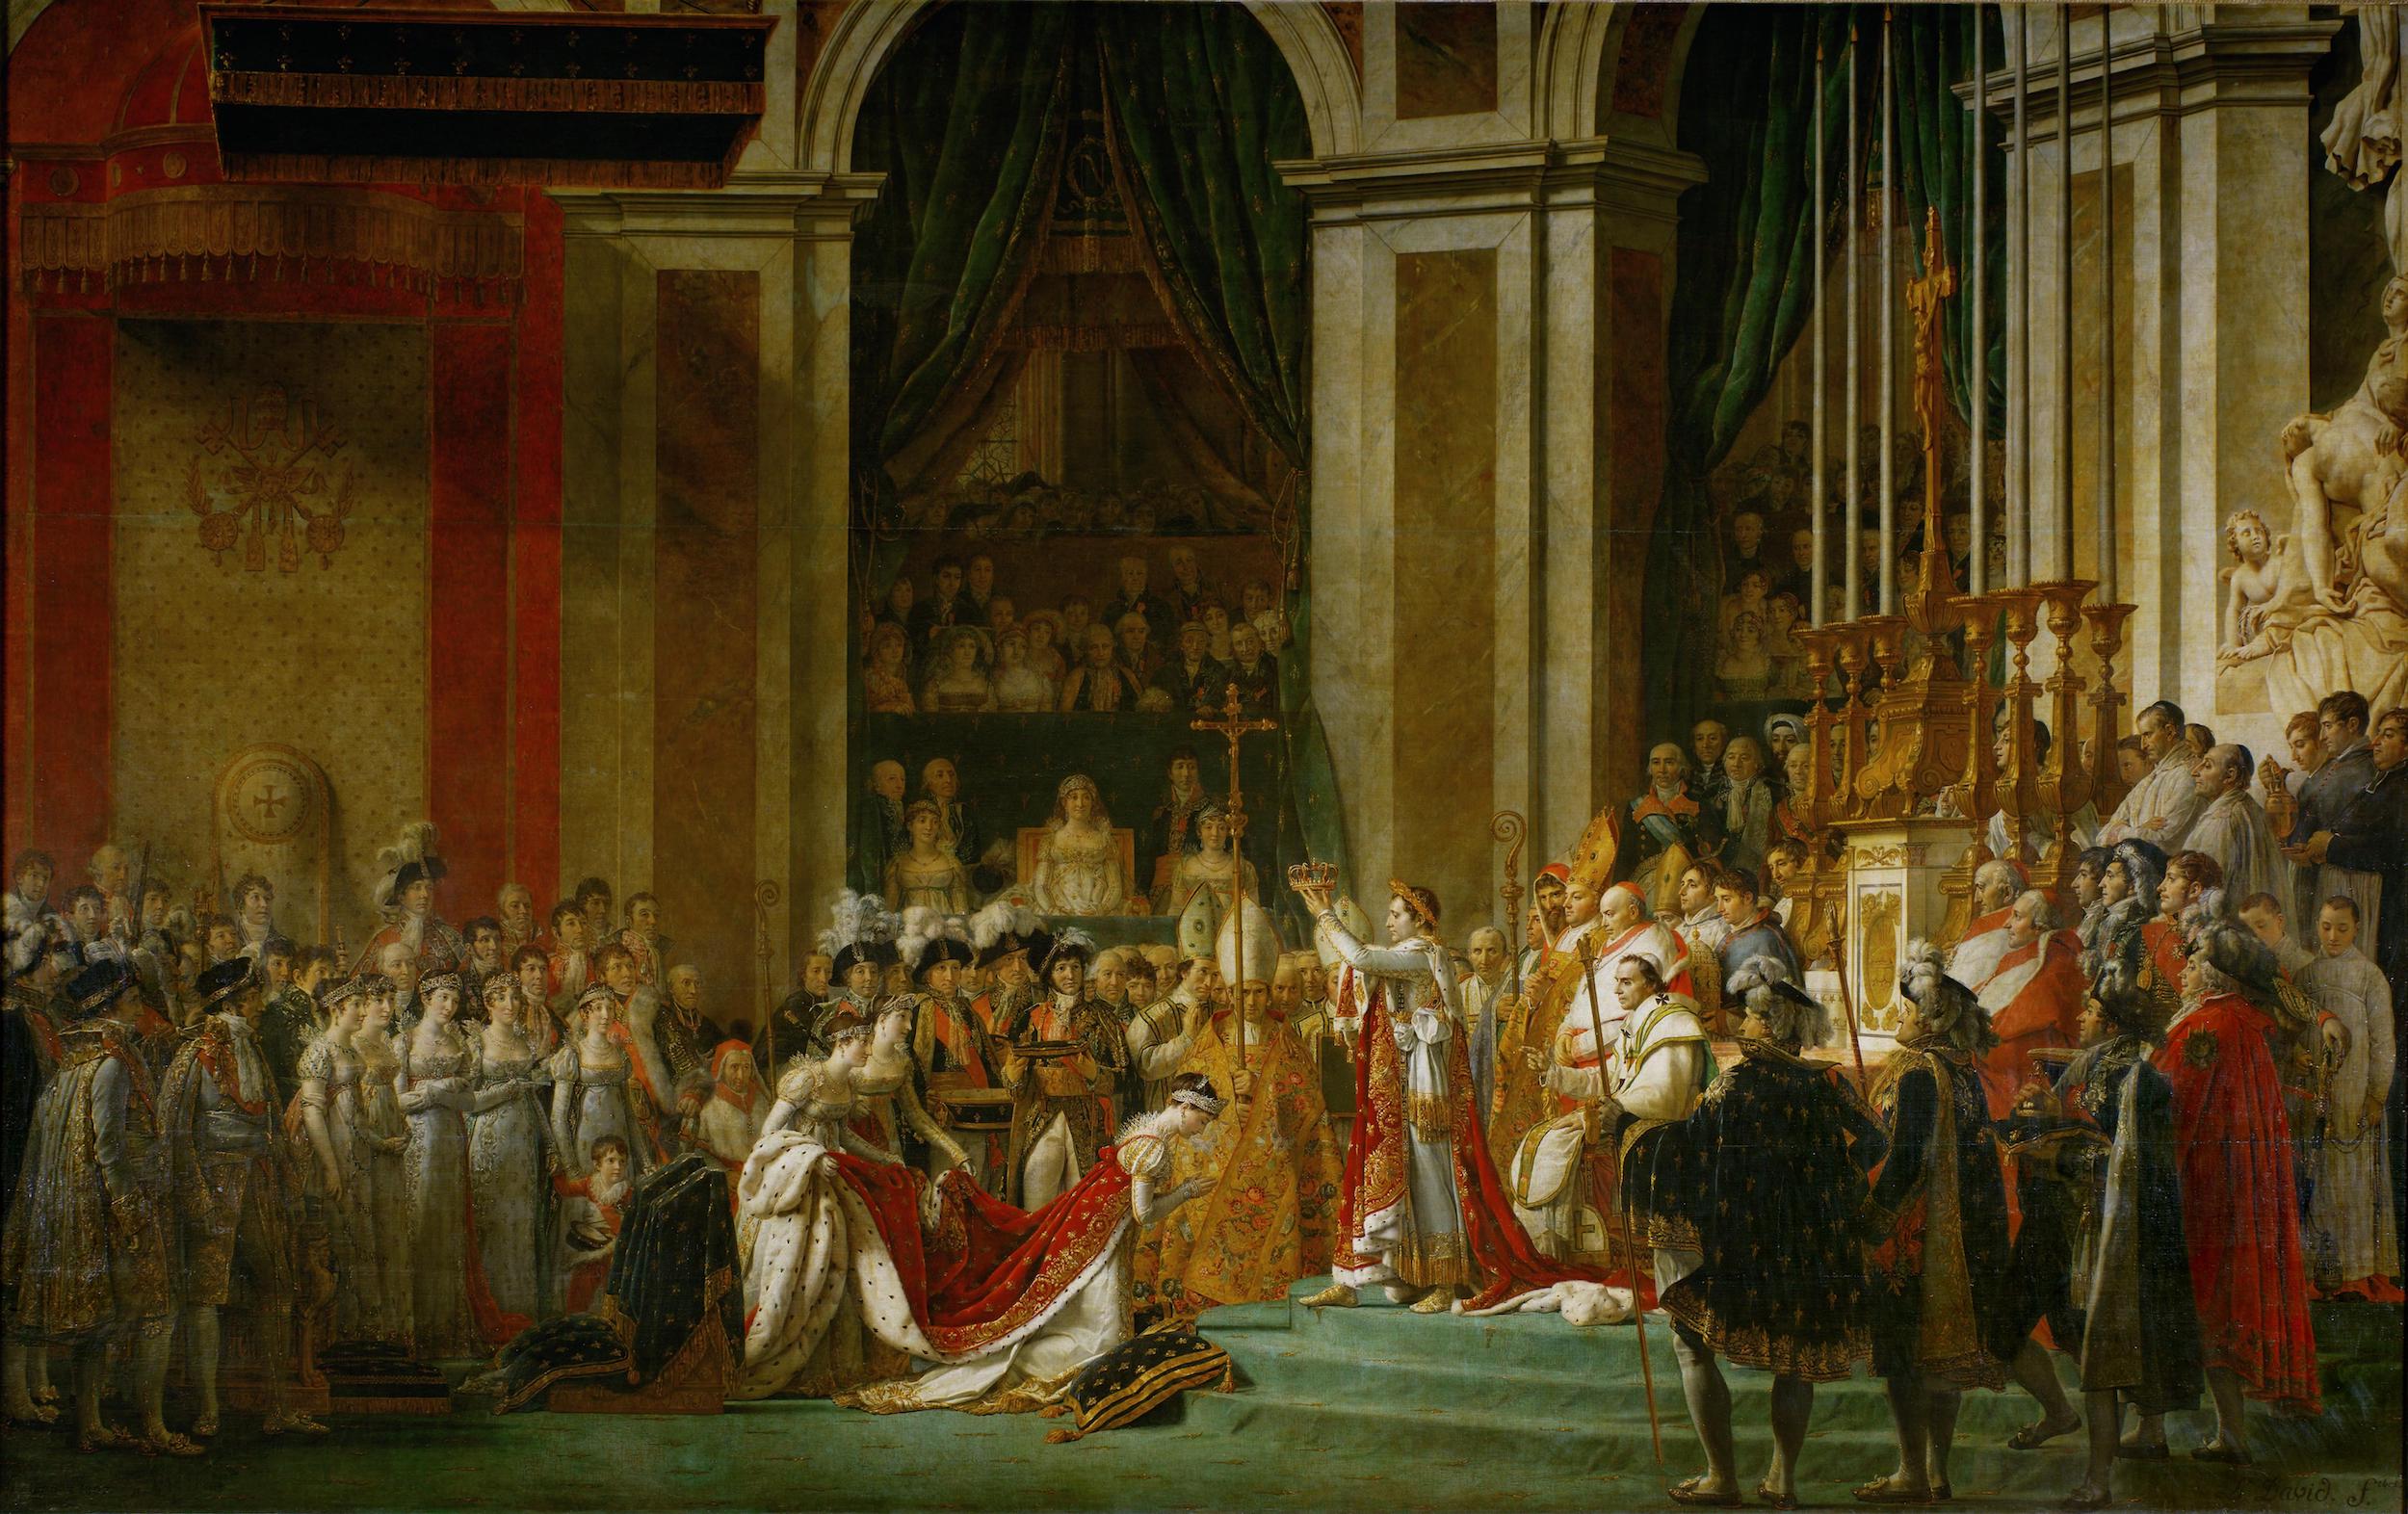 Коронация императора Наполеона I и коронация императрицы Жозефины by Jacques-Louis David - 1806-1807 - 6,21 x 9.79 м 